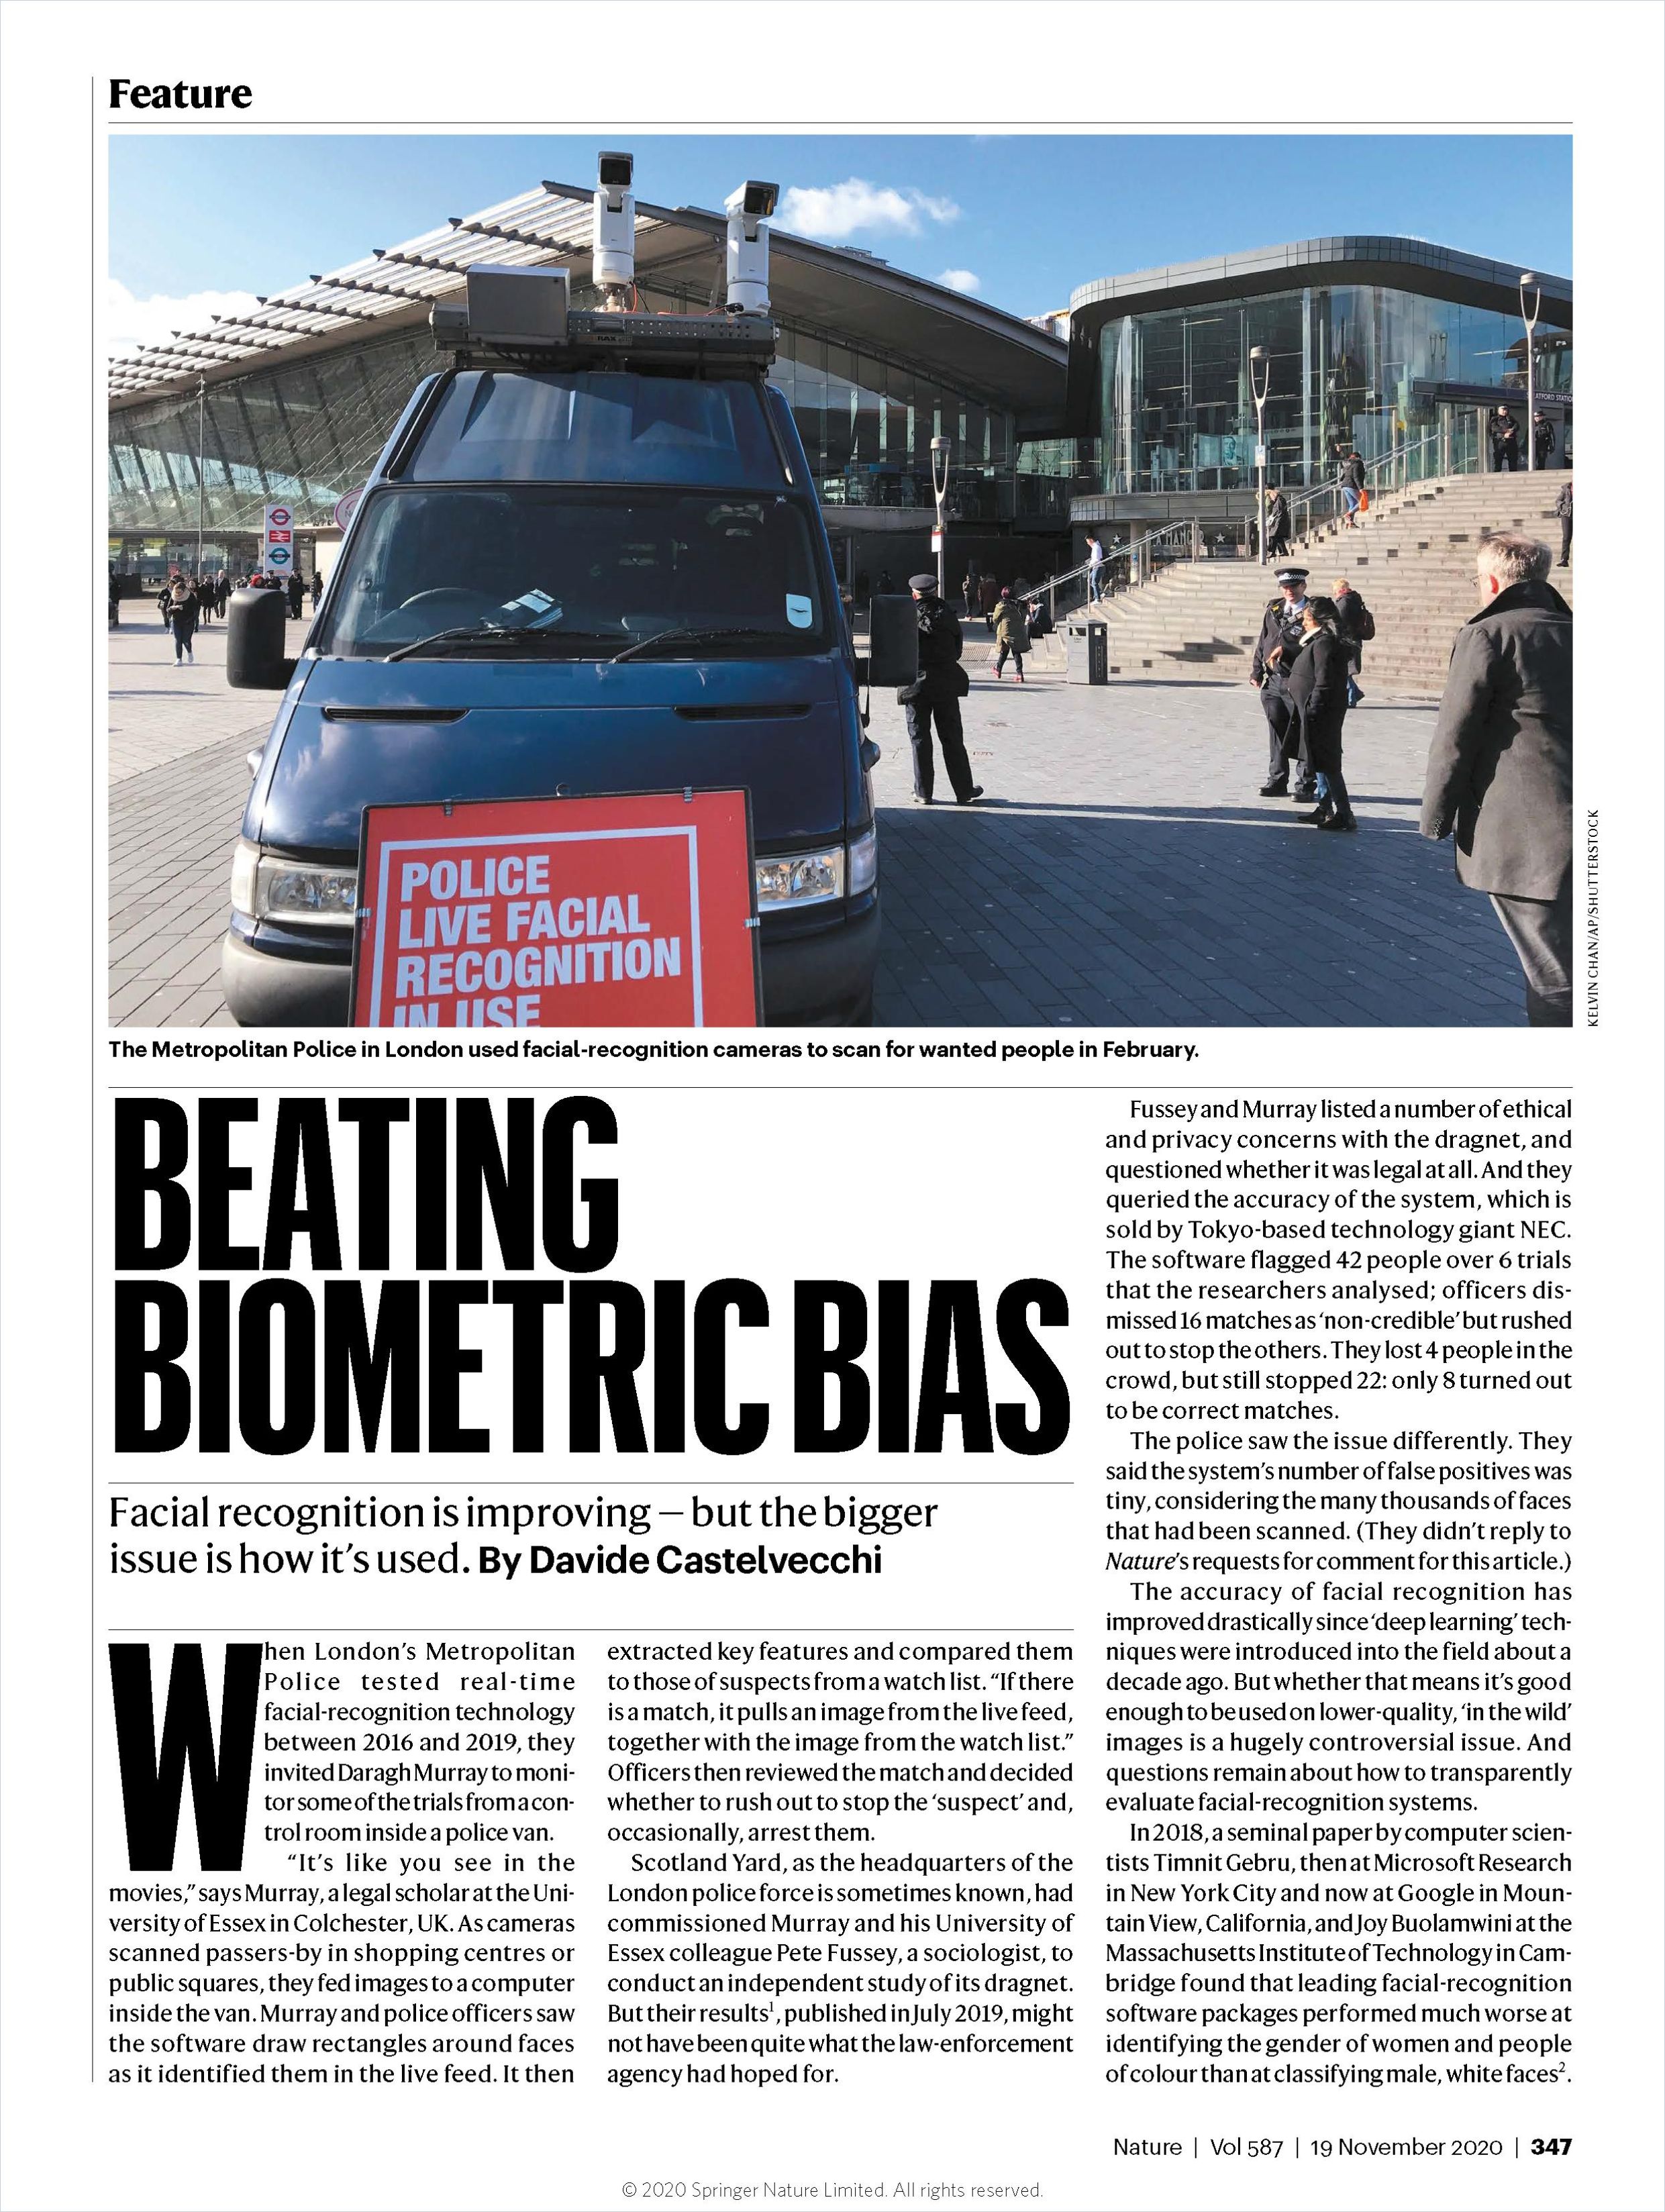 Image of: Beating Biometric Bias